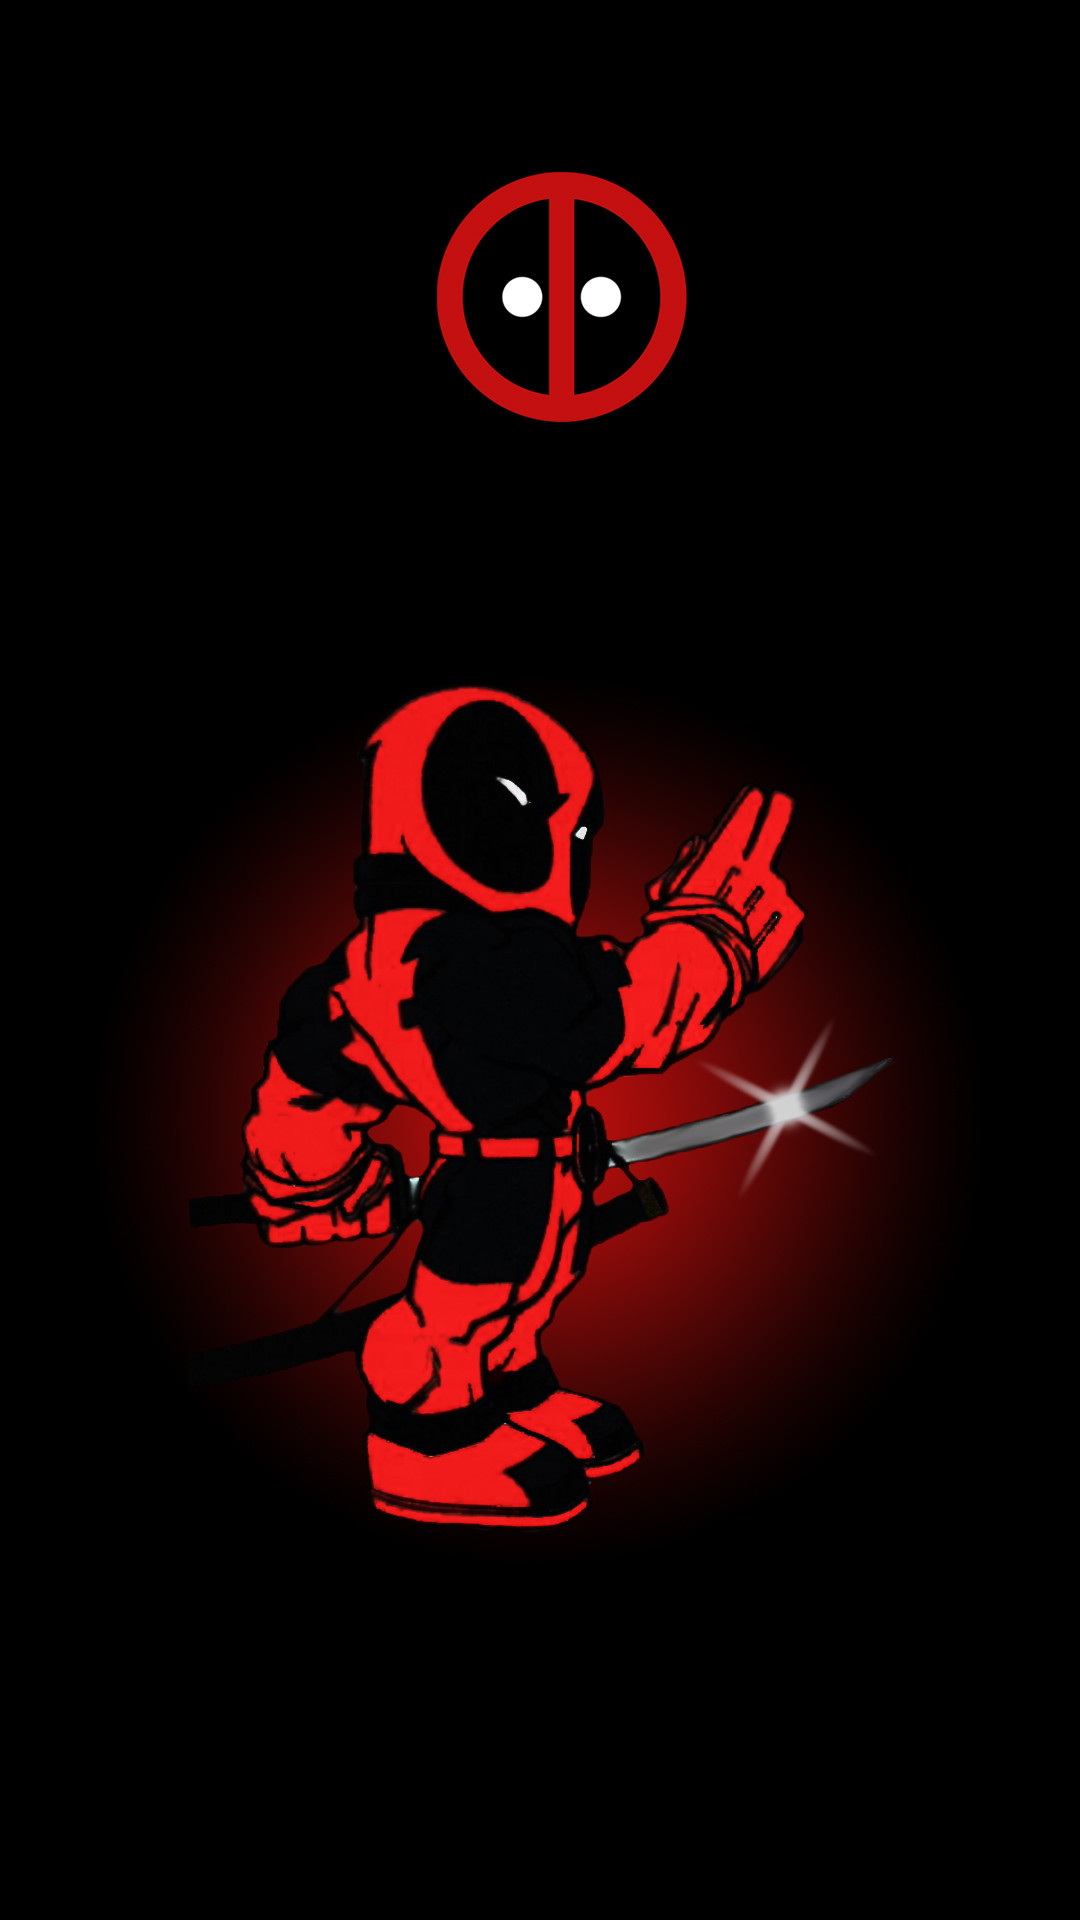 deadpool wallpaper,red,deadpool,fictional character,superhero,illustration